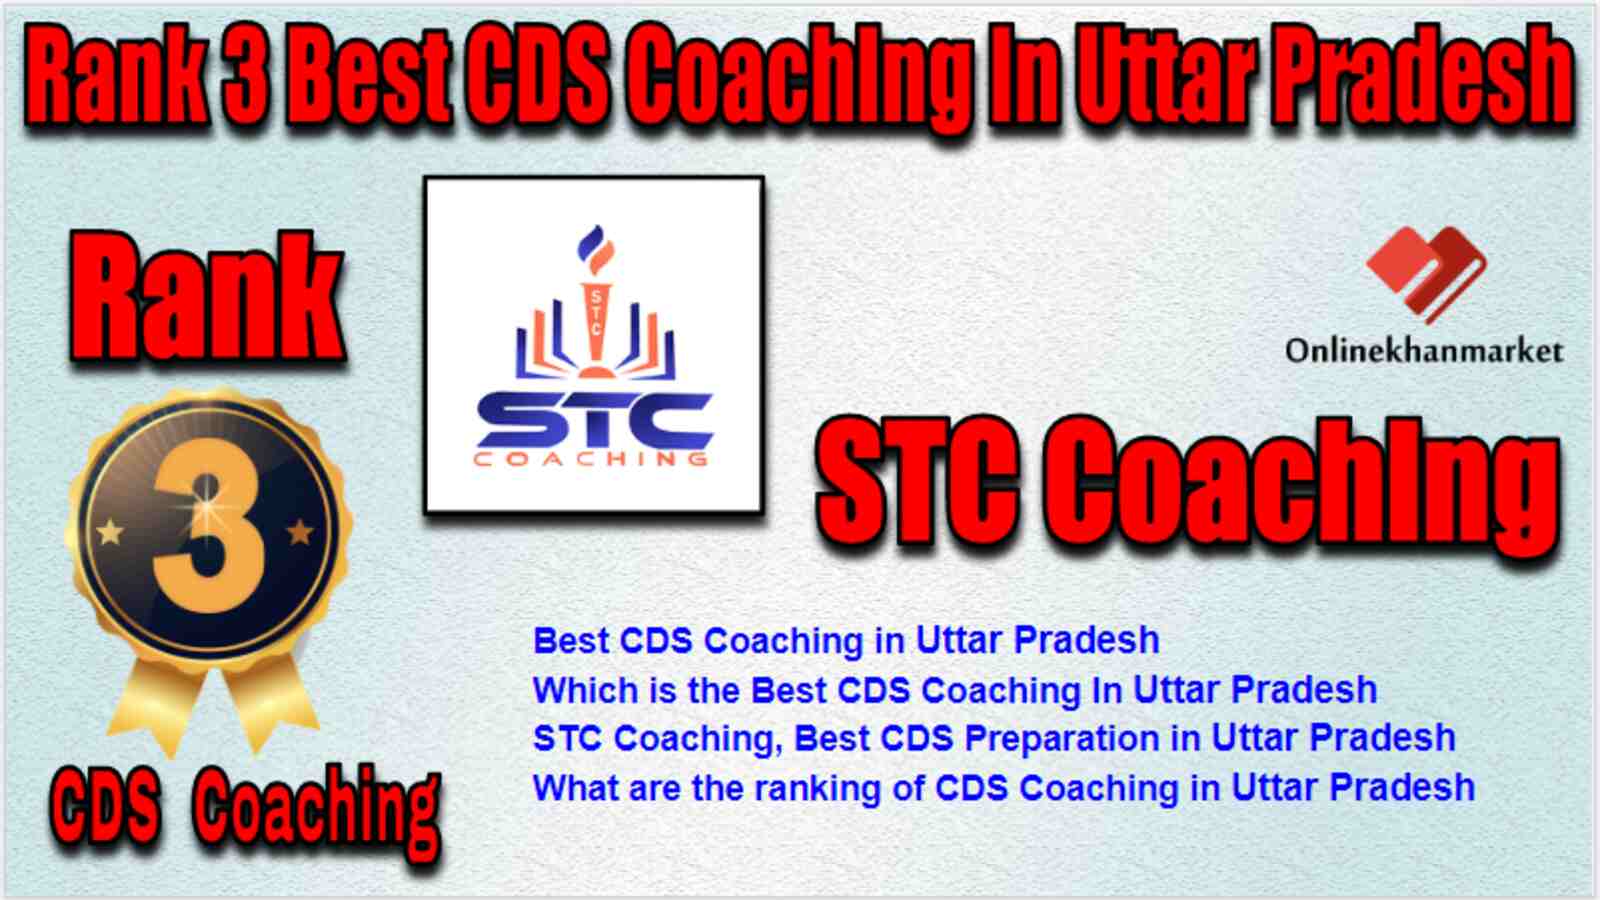 Rank 3 Best CDS Coaching in Uttar Pradesh